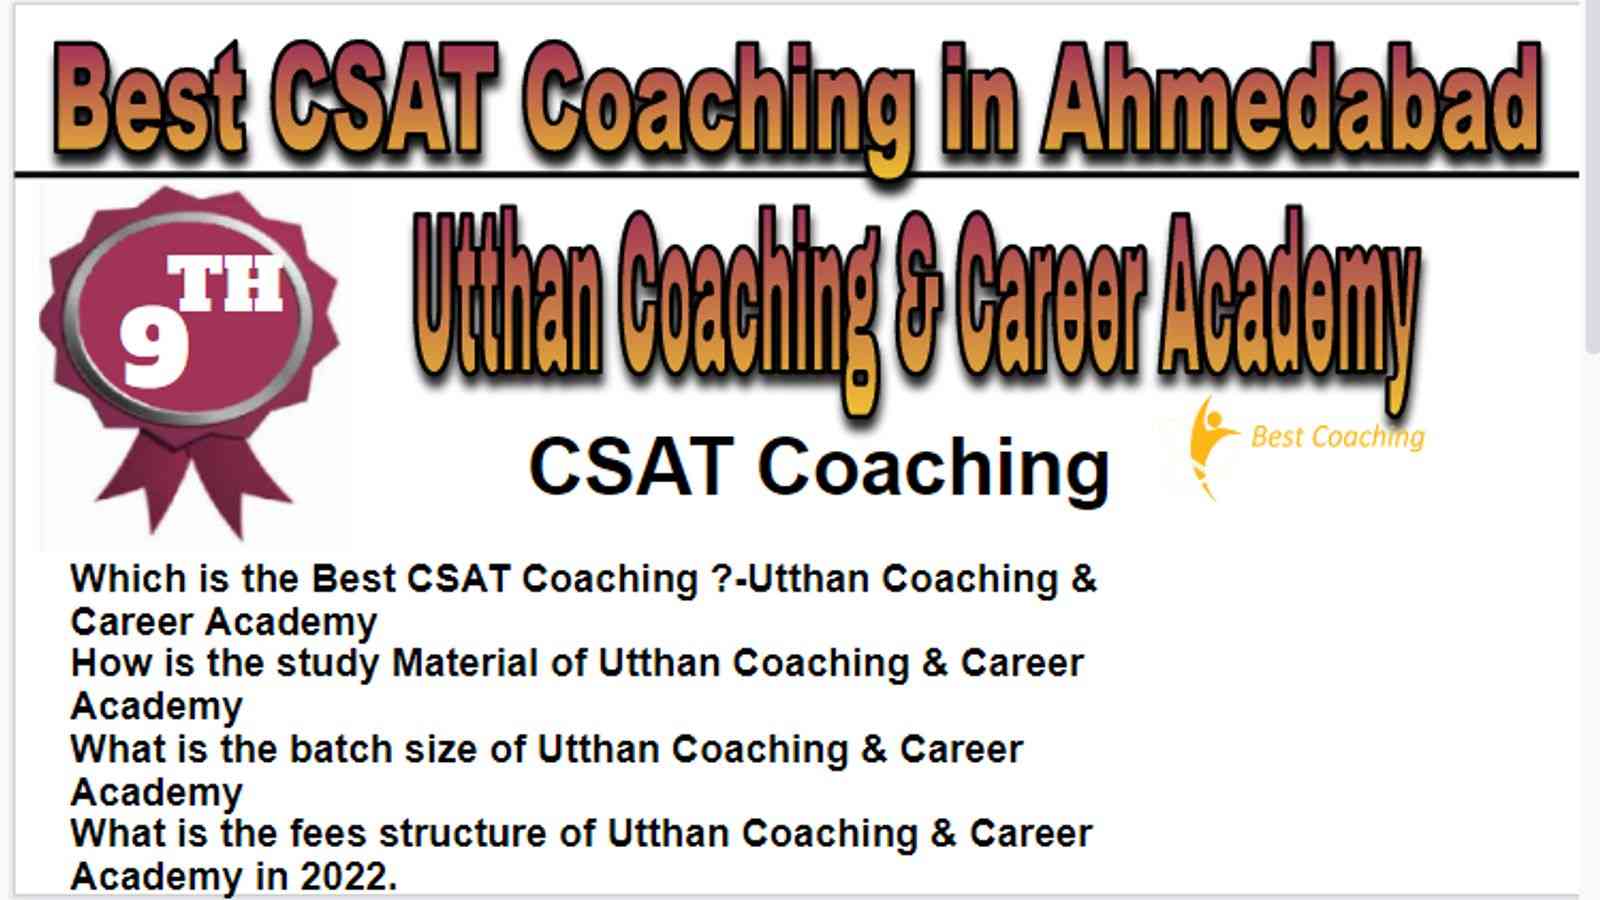 Rank 9 Best CSAT Coaching in Ahmedabad